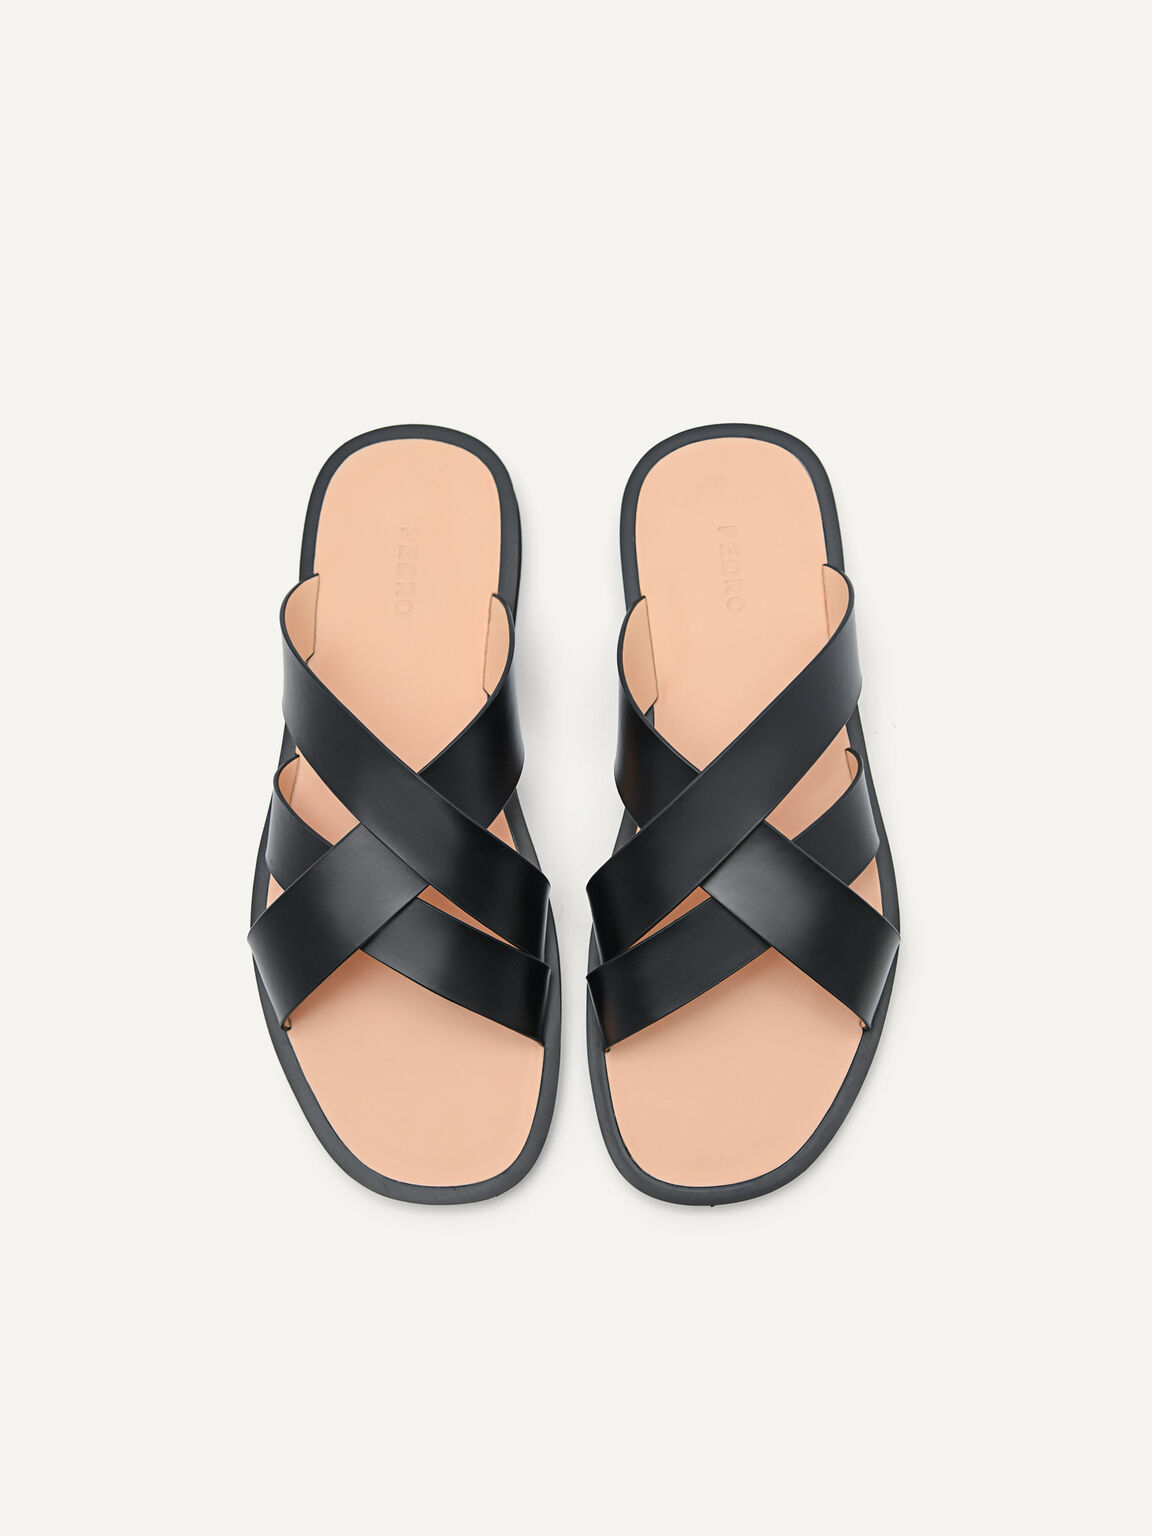 Dune Cross Strap Sandals, Black